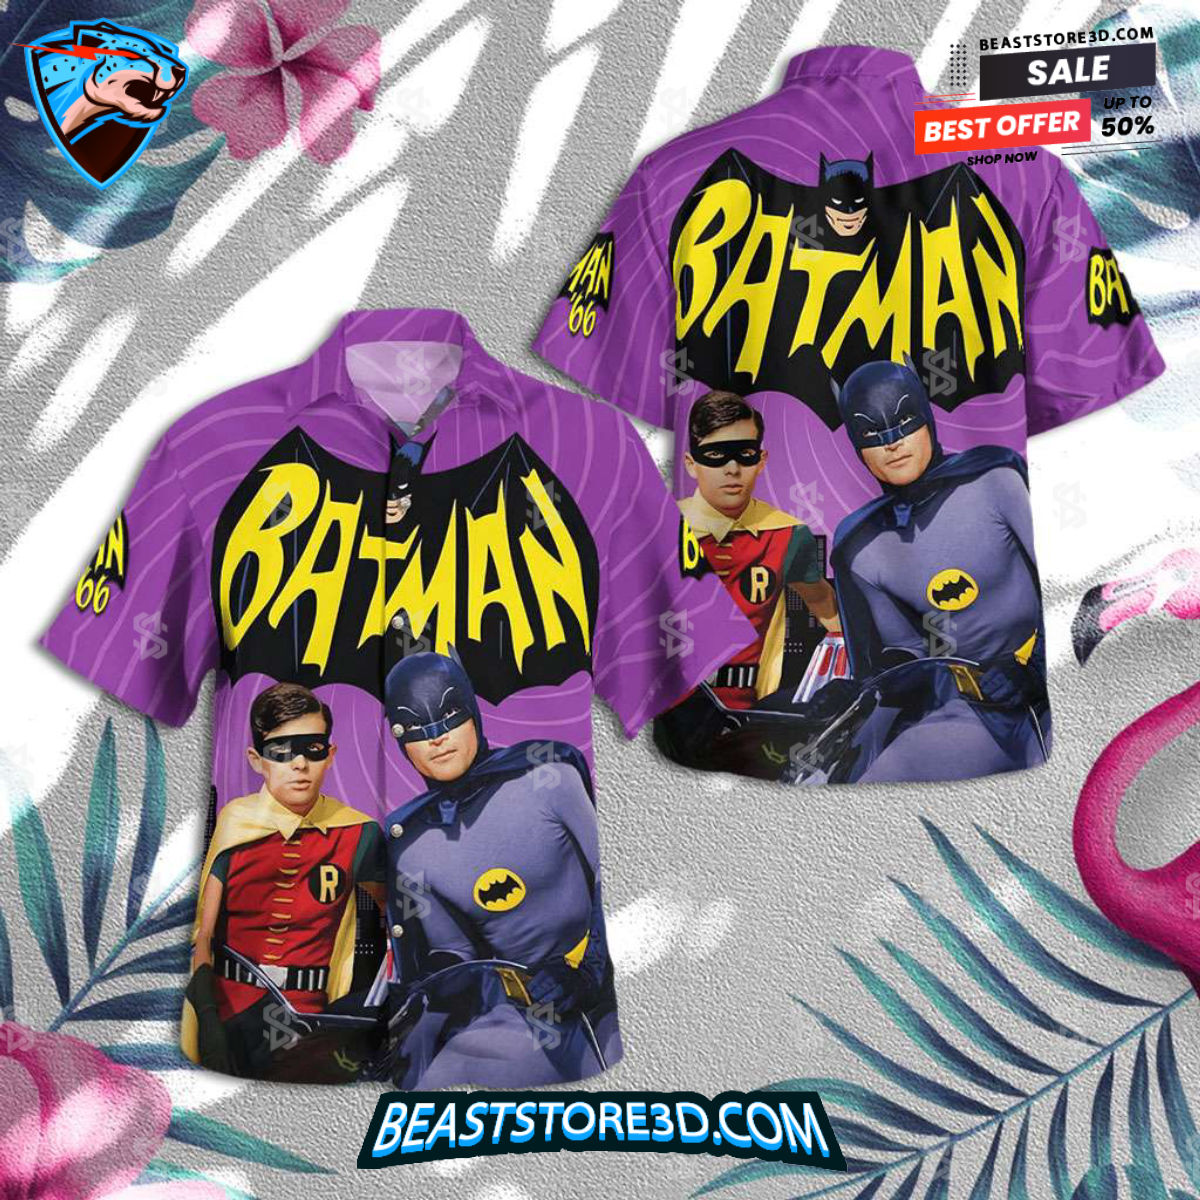 Batman Batman And Robin Aloha Hawaiian Shirt 1697613631808 2ens8.jpg